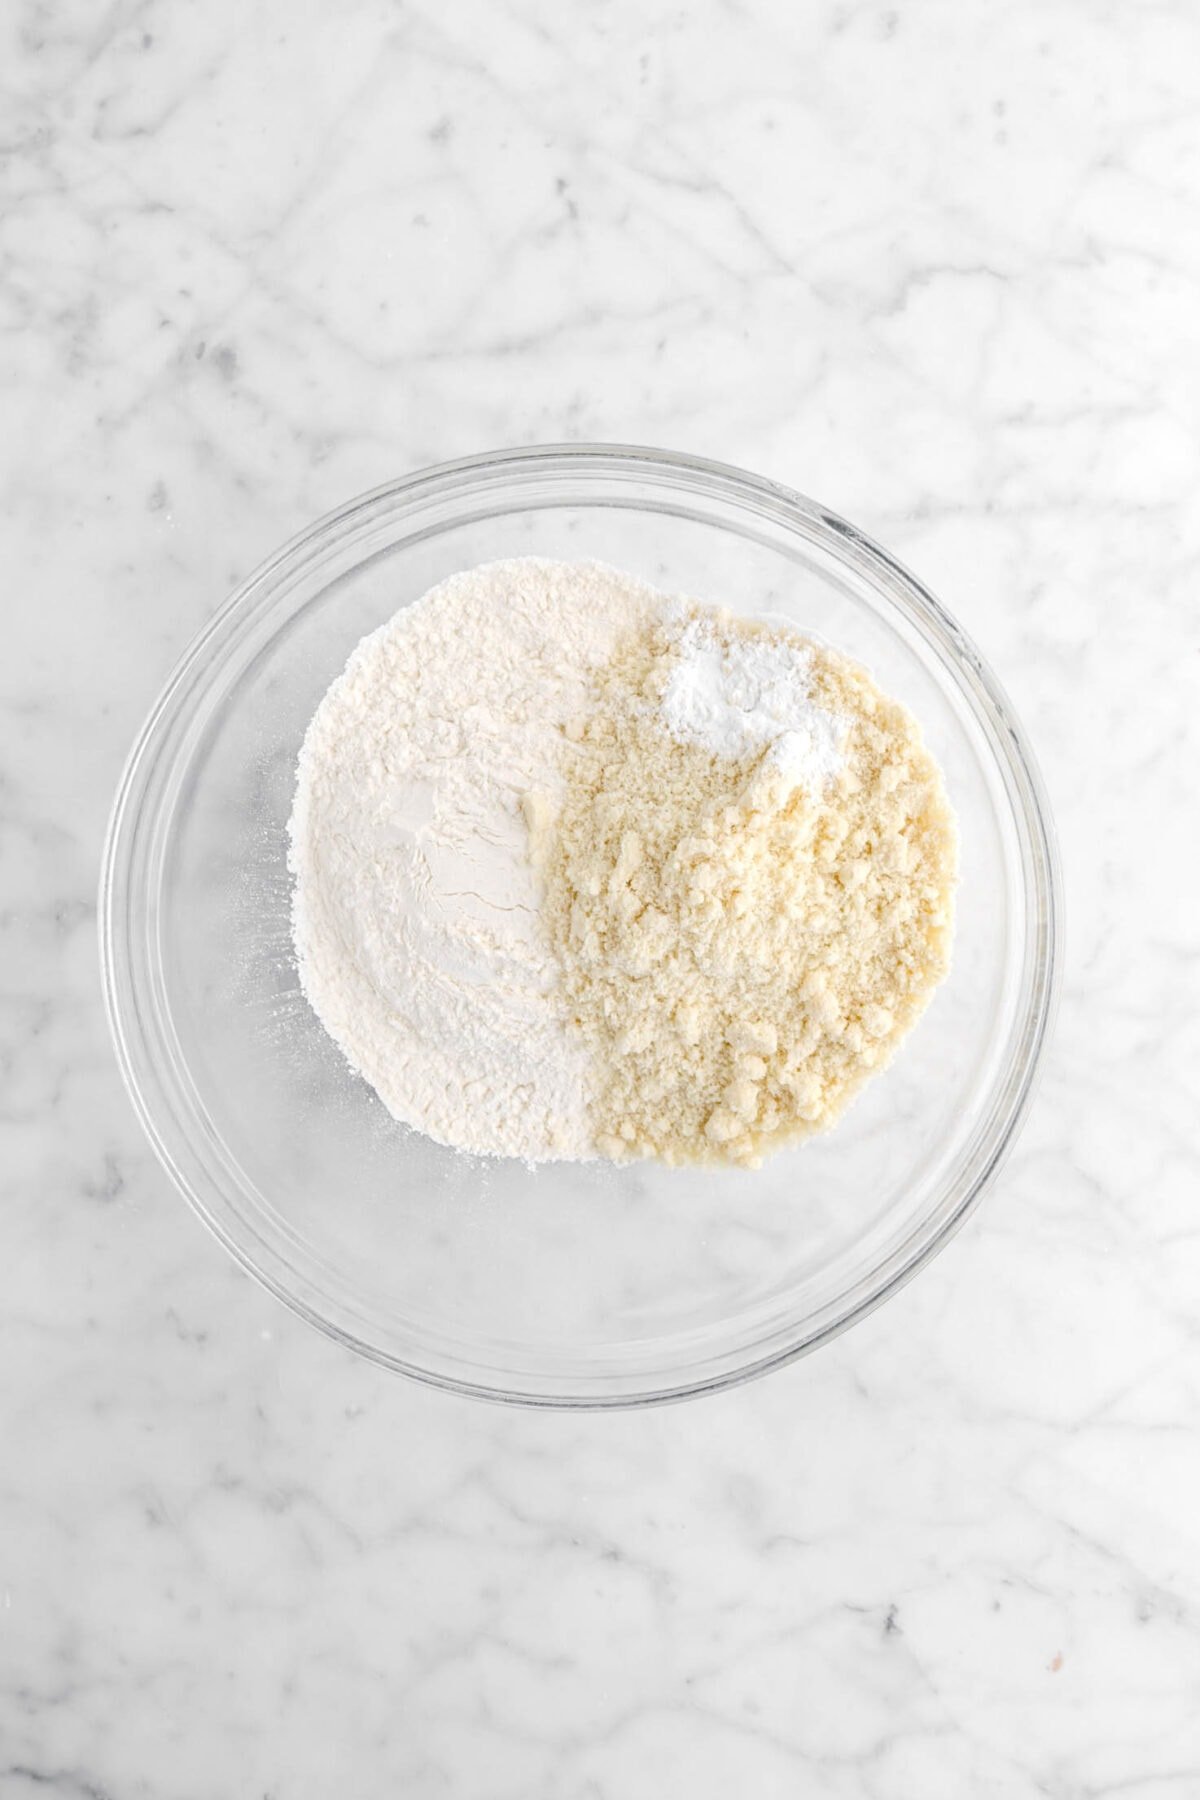 almond flour, baking powder, and flour in glass bowl